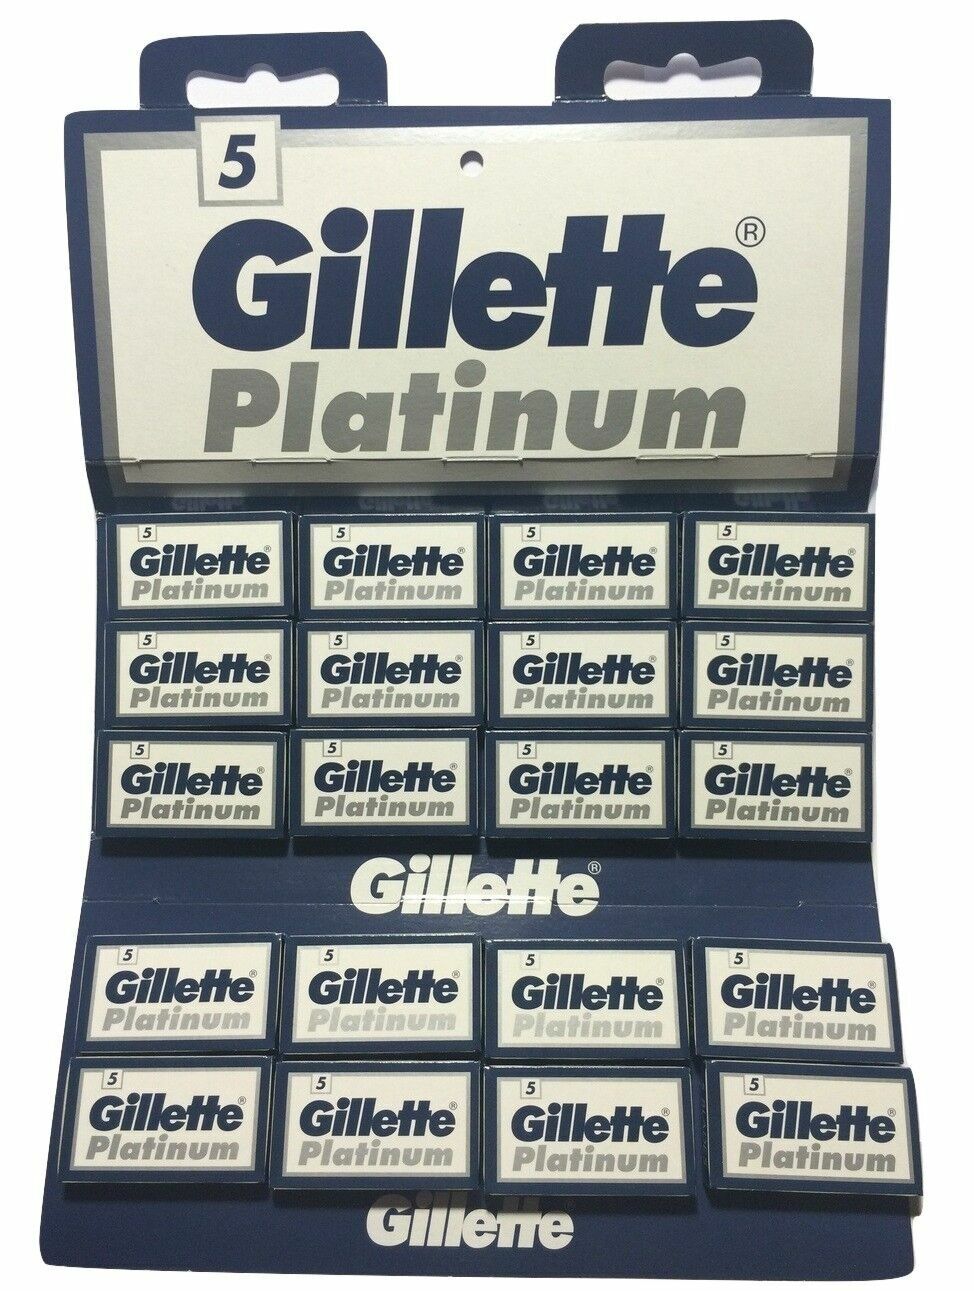 1000 Gillette Platinum double edge razor blades (10 packs of 100